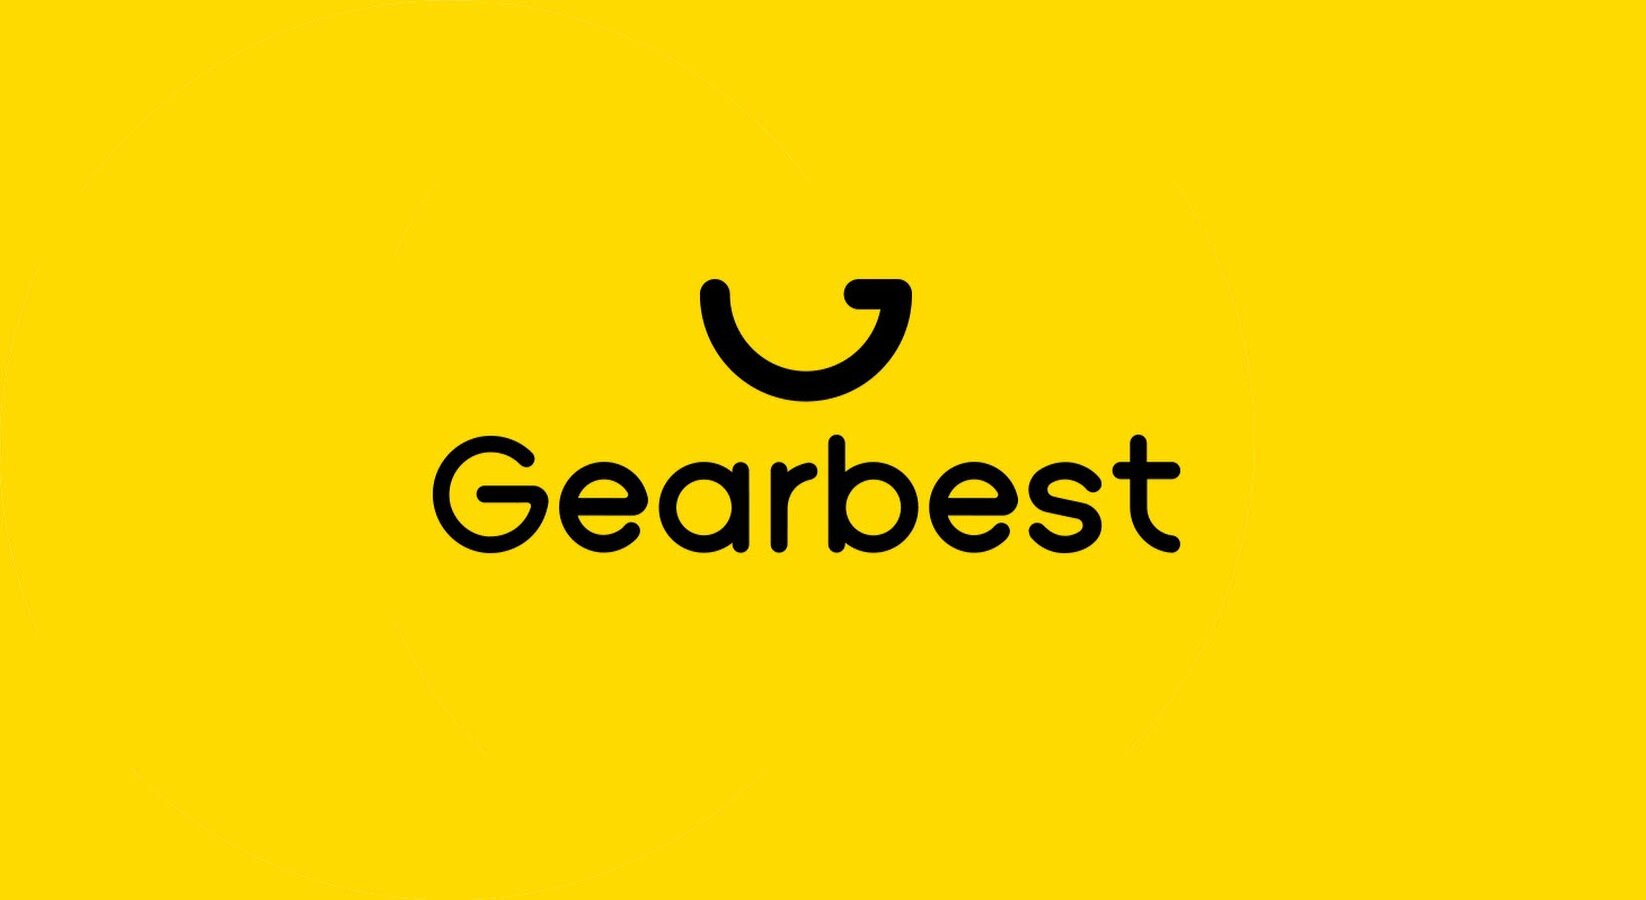 H Gearbest άφησε τις βάσεις δεδομένων της απροστάτευτες, με αποτέλεσμα να εκτεθούν τα δεδομένα πολλών χιλιάδων πελατών της